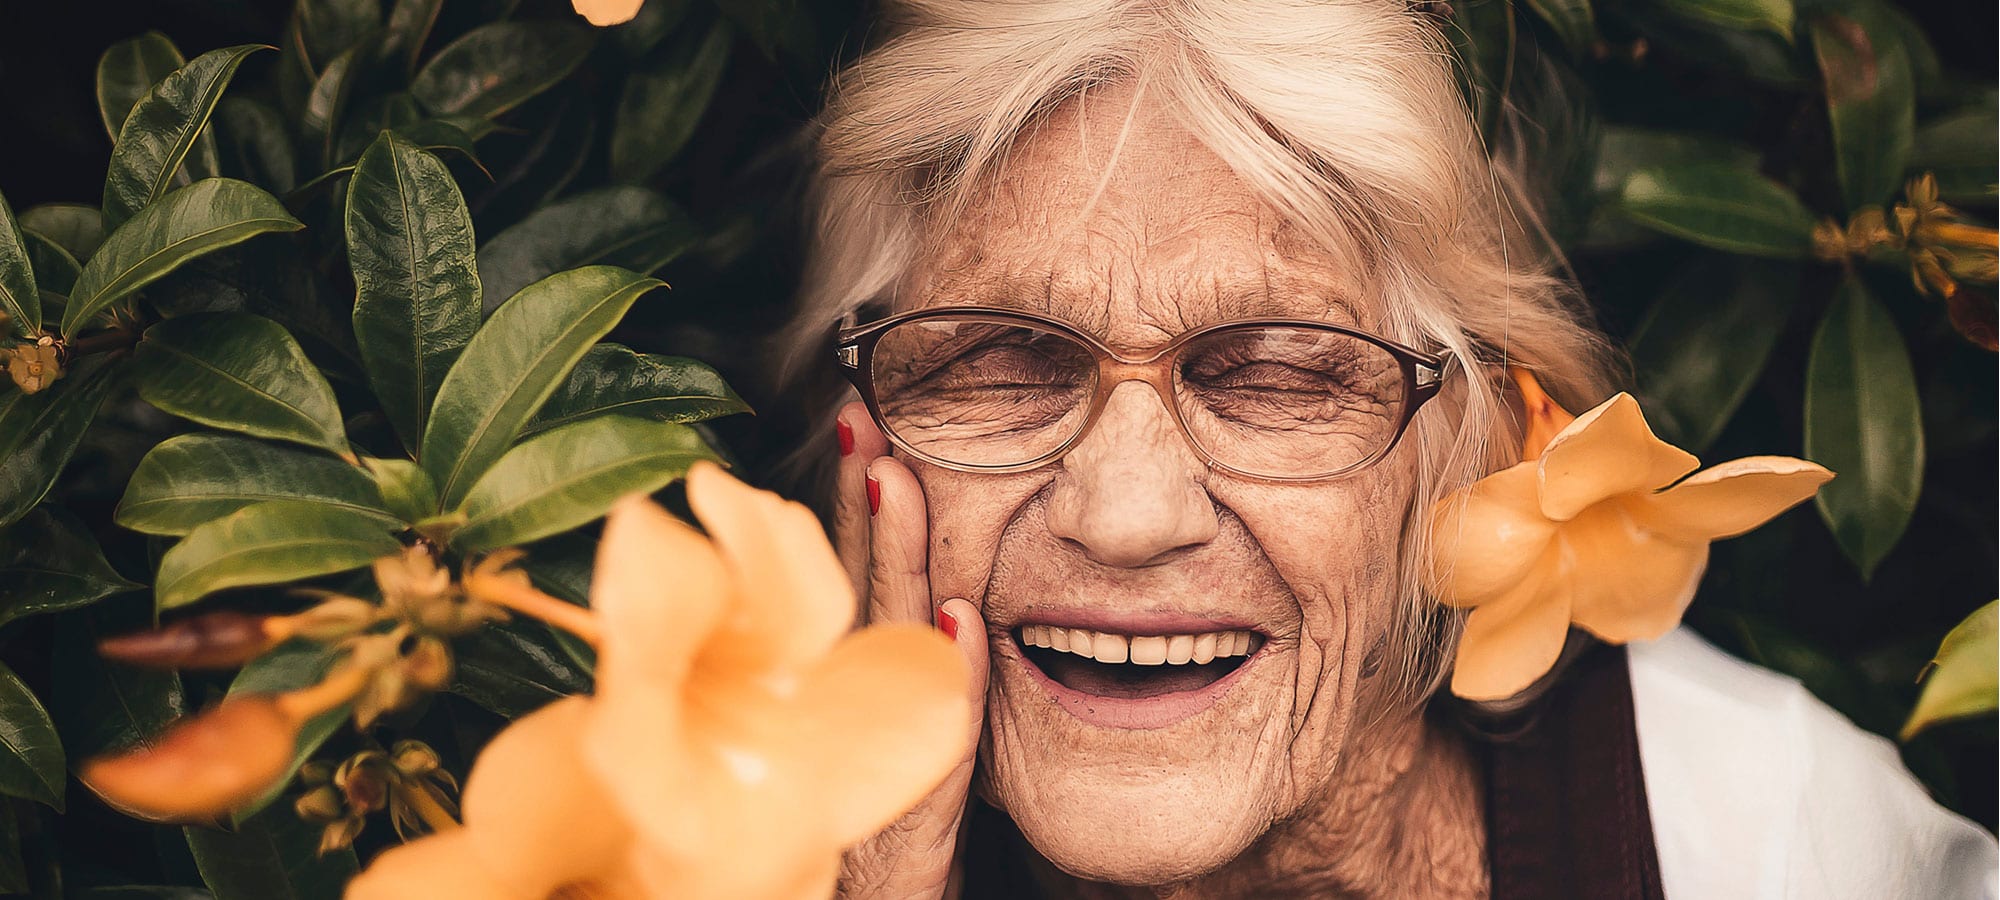 Older lady smiling in garden